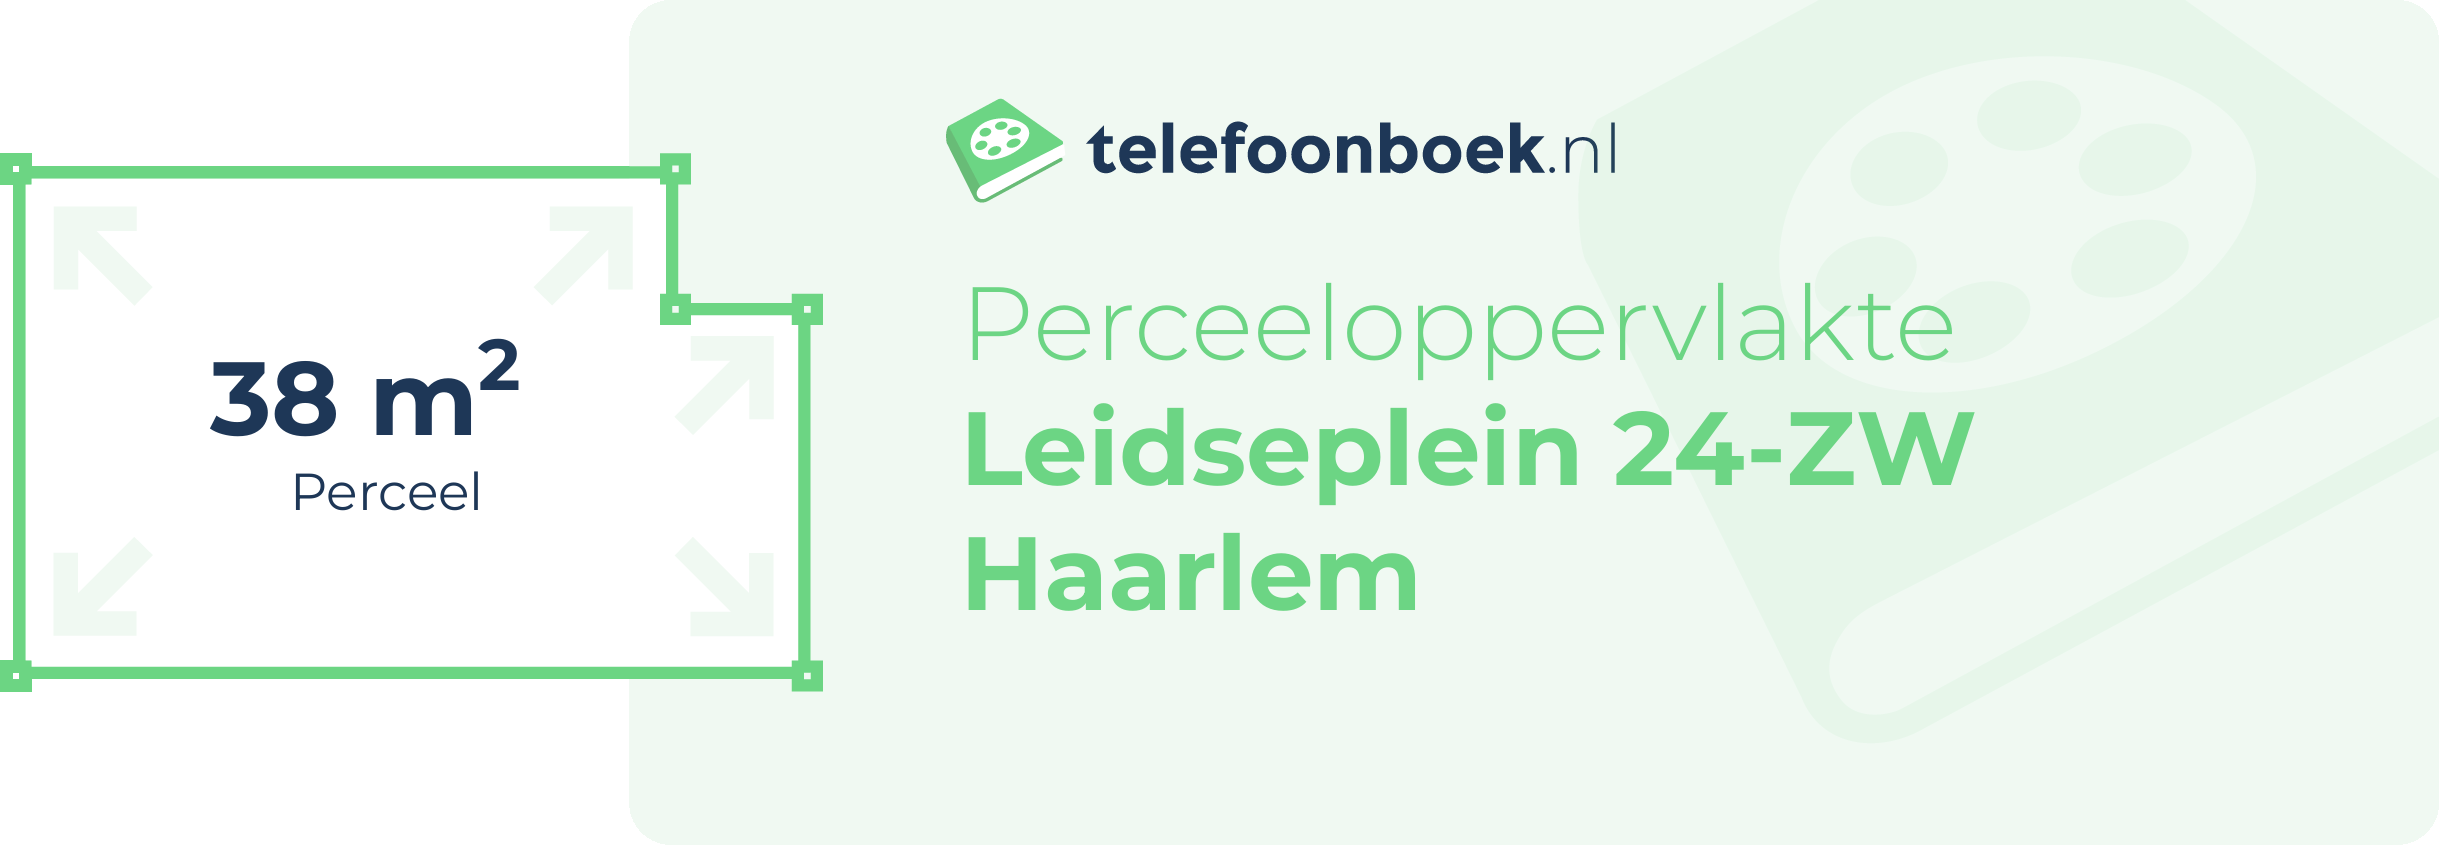 Perceeloppervlakte Leidseplein 24-ZW Haarlem